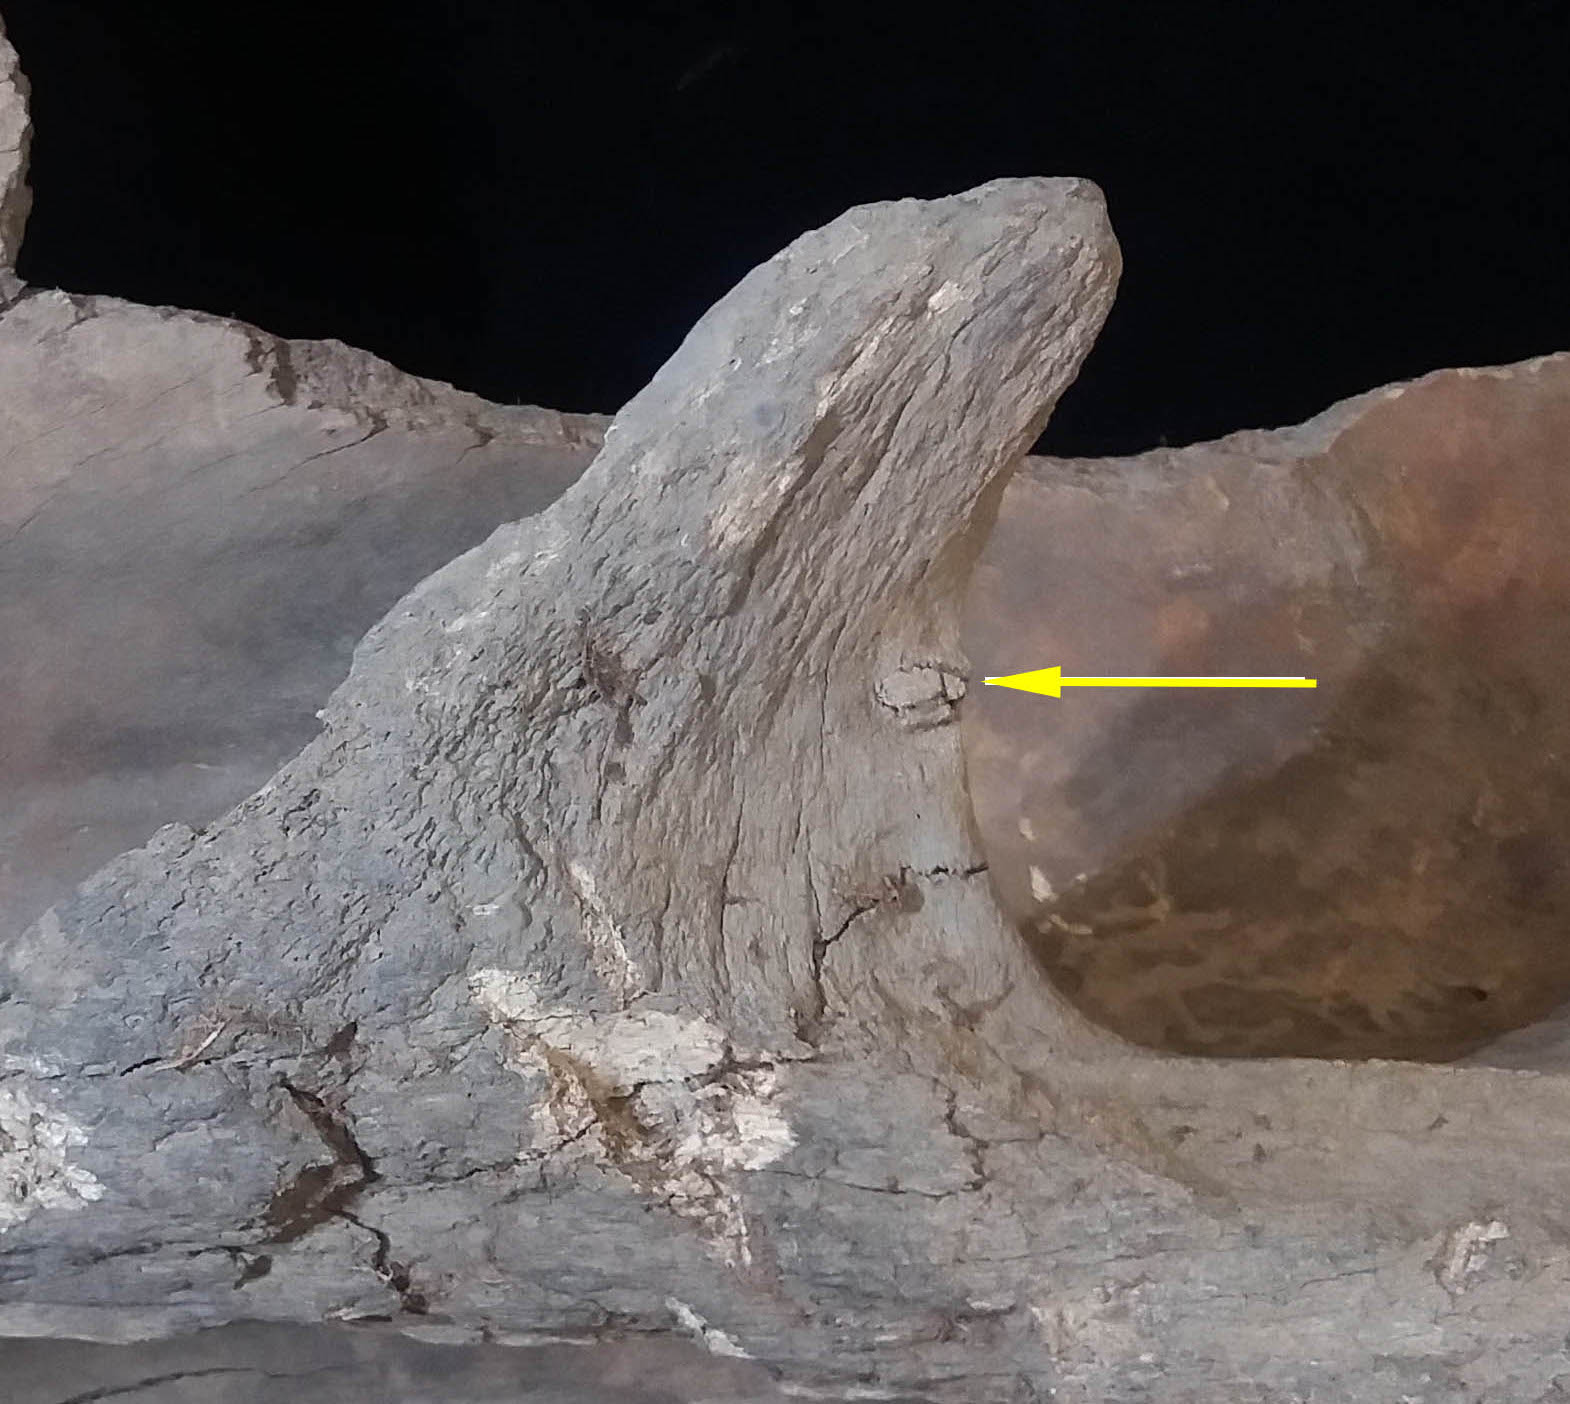 The mammoth scapula (shoulder bone) with embedded bone object. (Image: Innokentiy Pavlov (Department of Study of the Mammoth Fauna, Academy of Sciences of Sakha Republic, Yakutsk, Republic of Sakha (Yakutia), Russian Federation).)